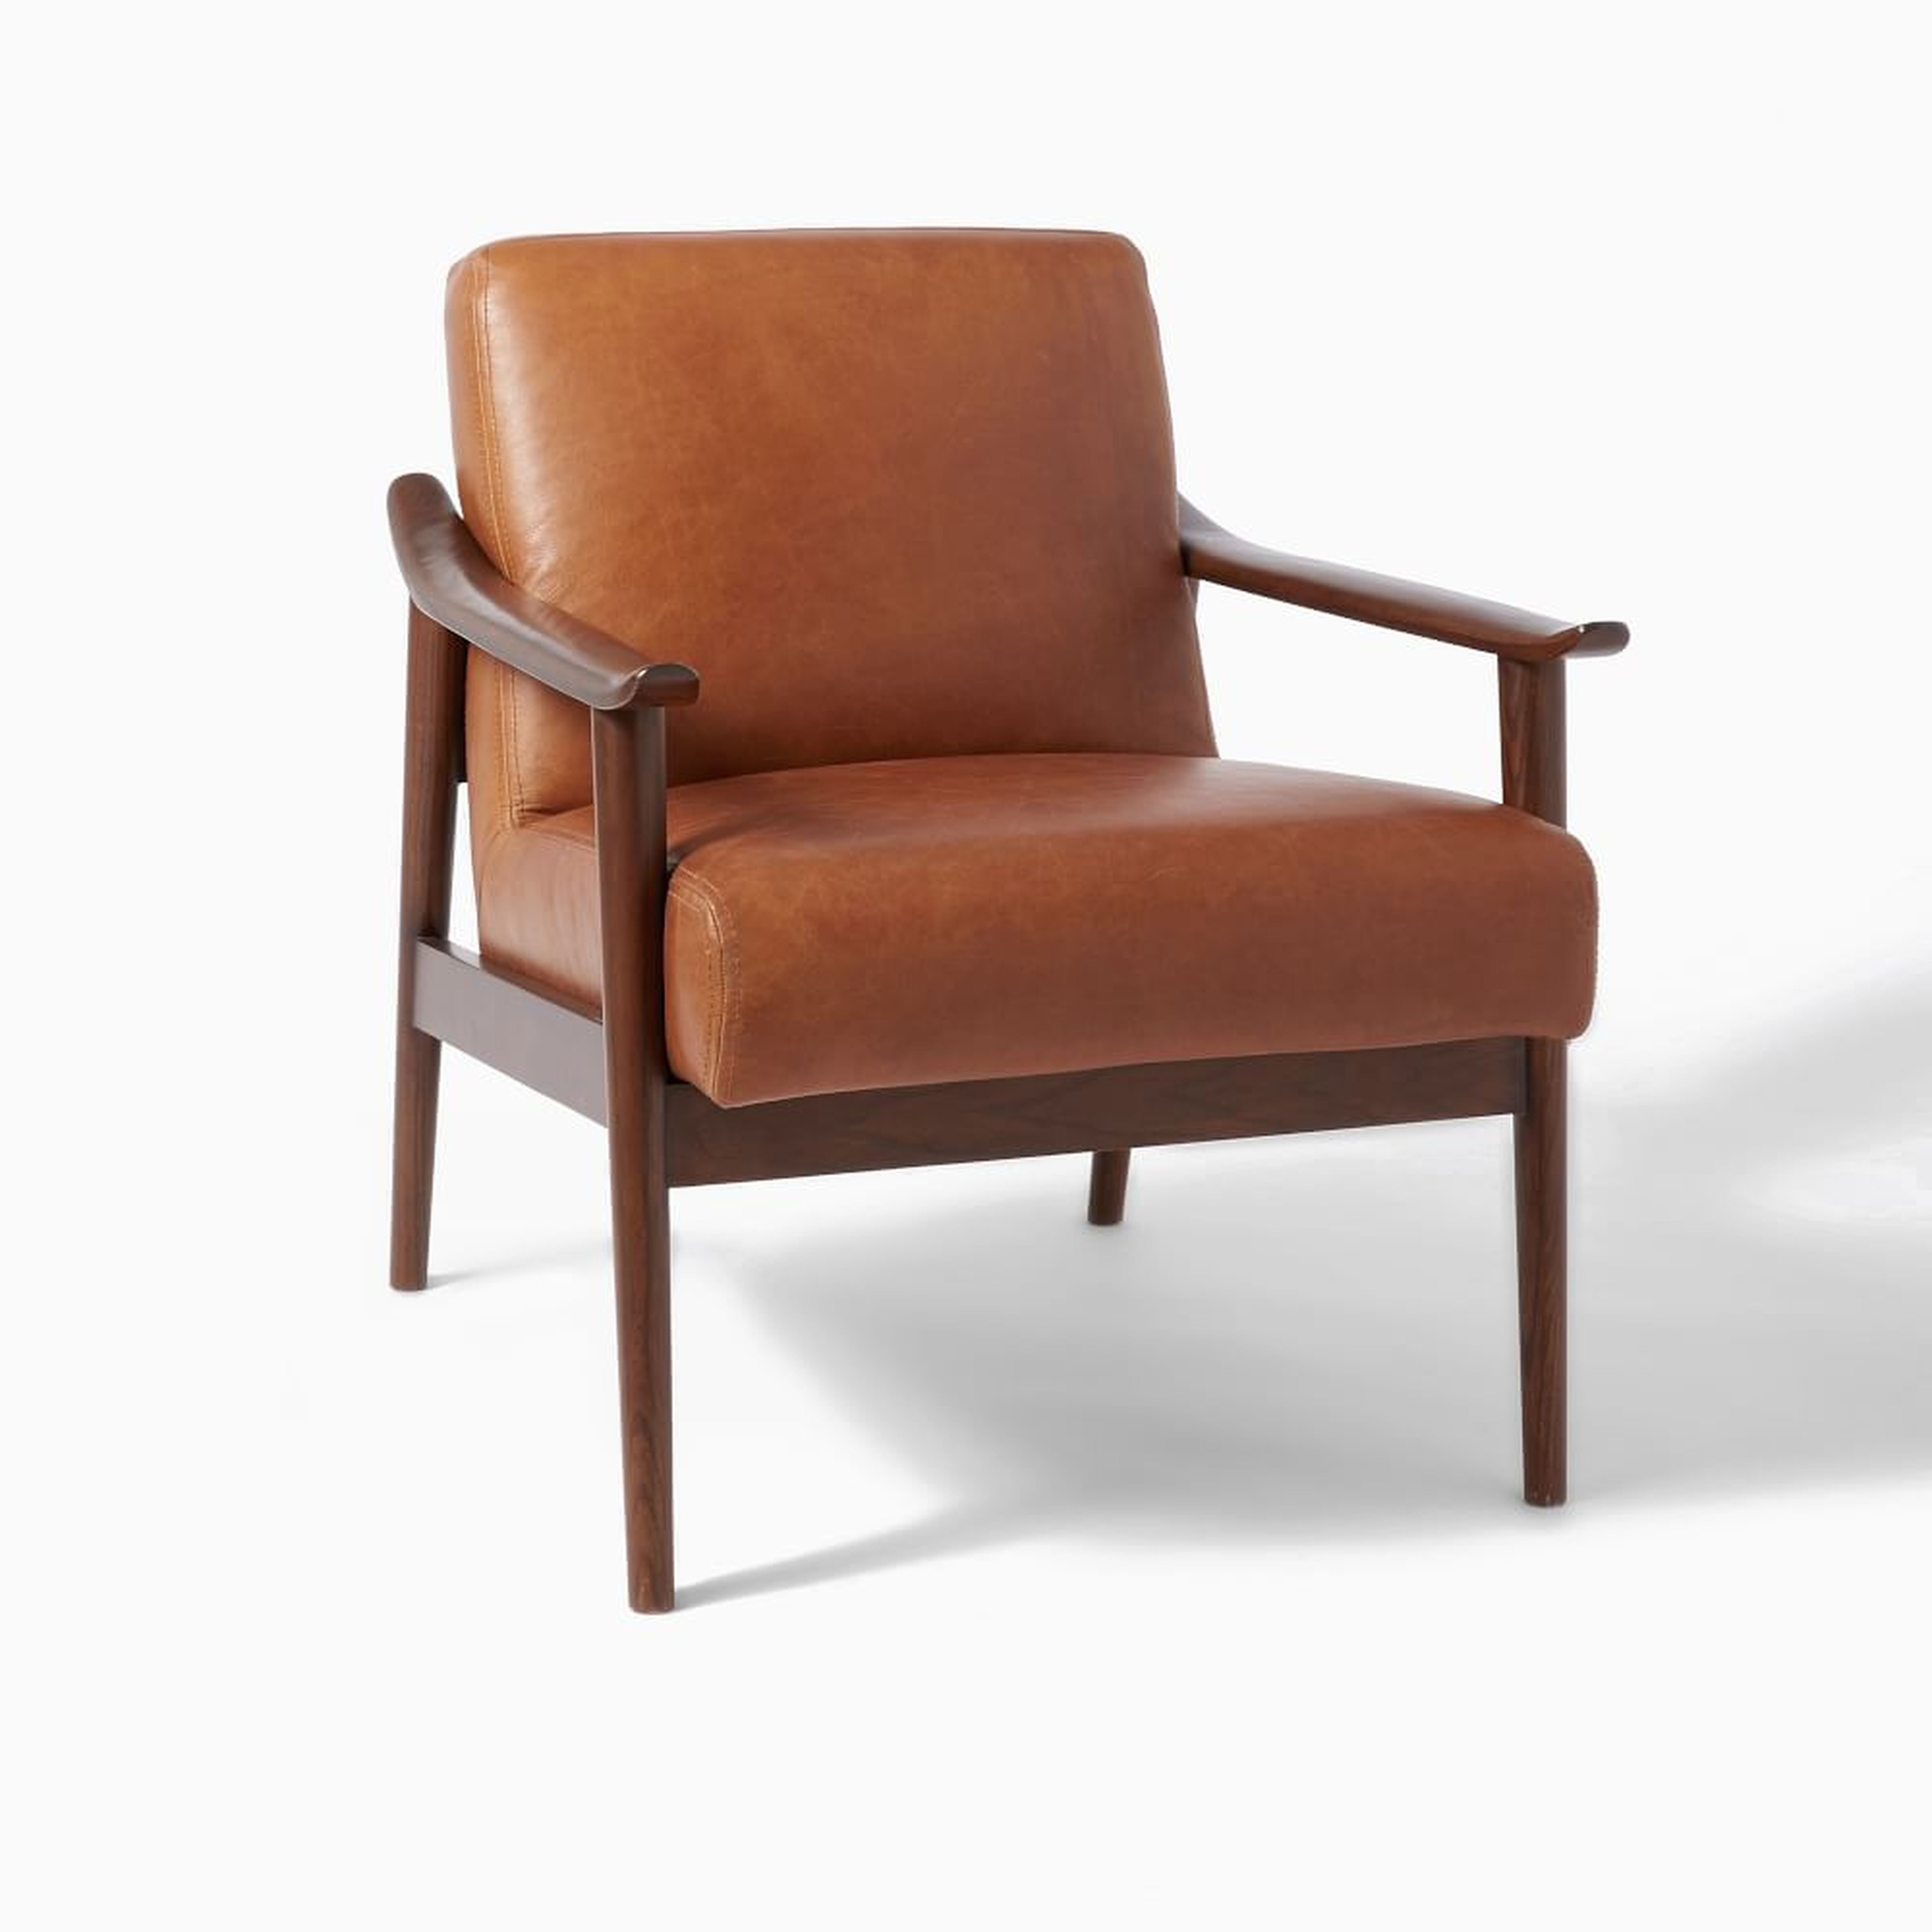 Midcentury Show Wood Leather Chair, Saddle/Espresso - West Elm